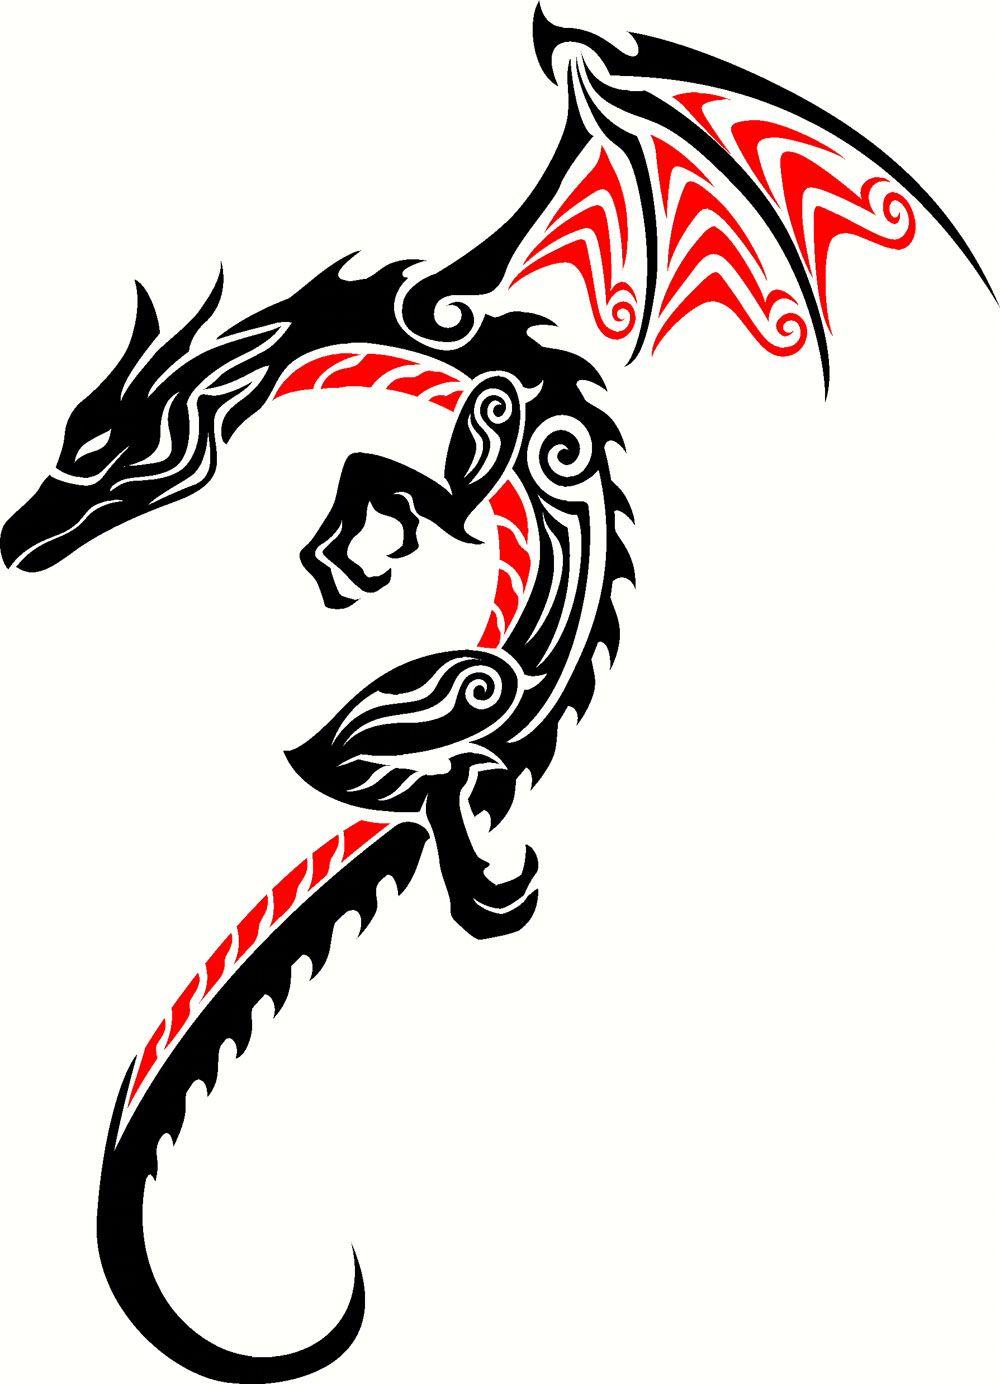 Flying Dragon Logo - Wall Stickers » Blog Archive » Flying Dragon